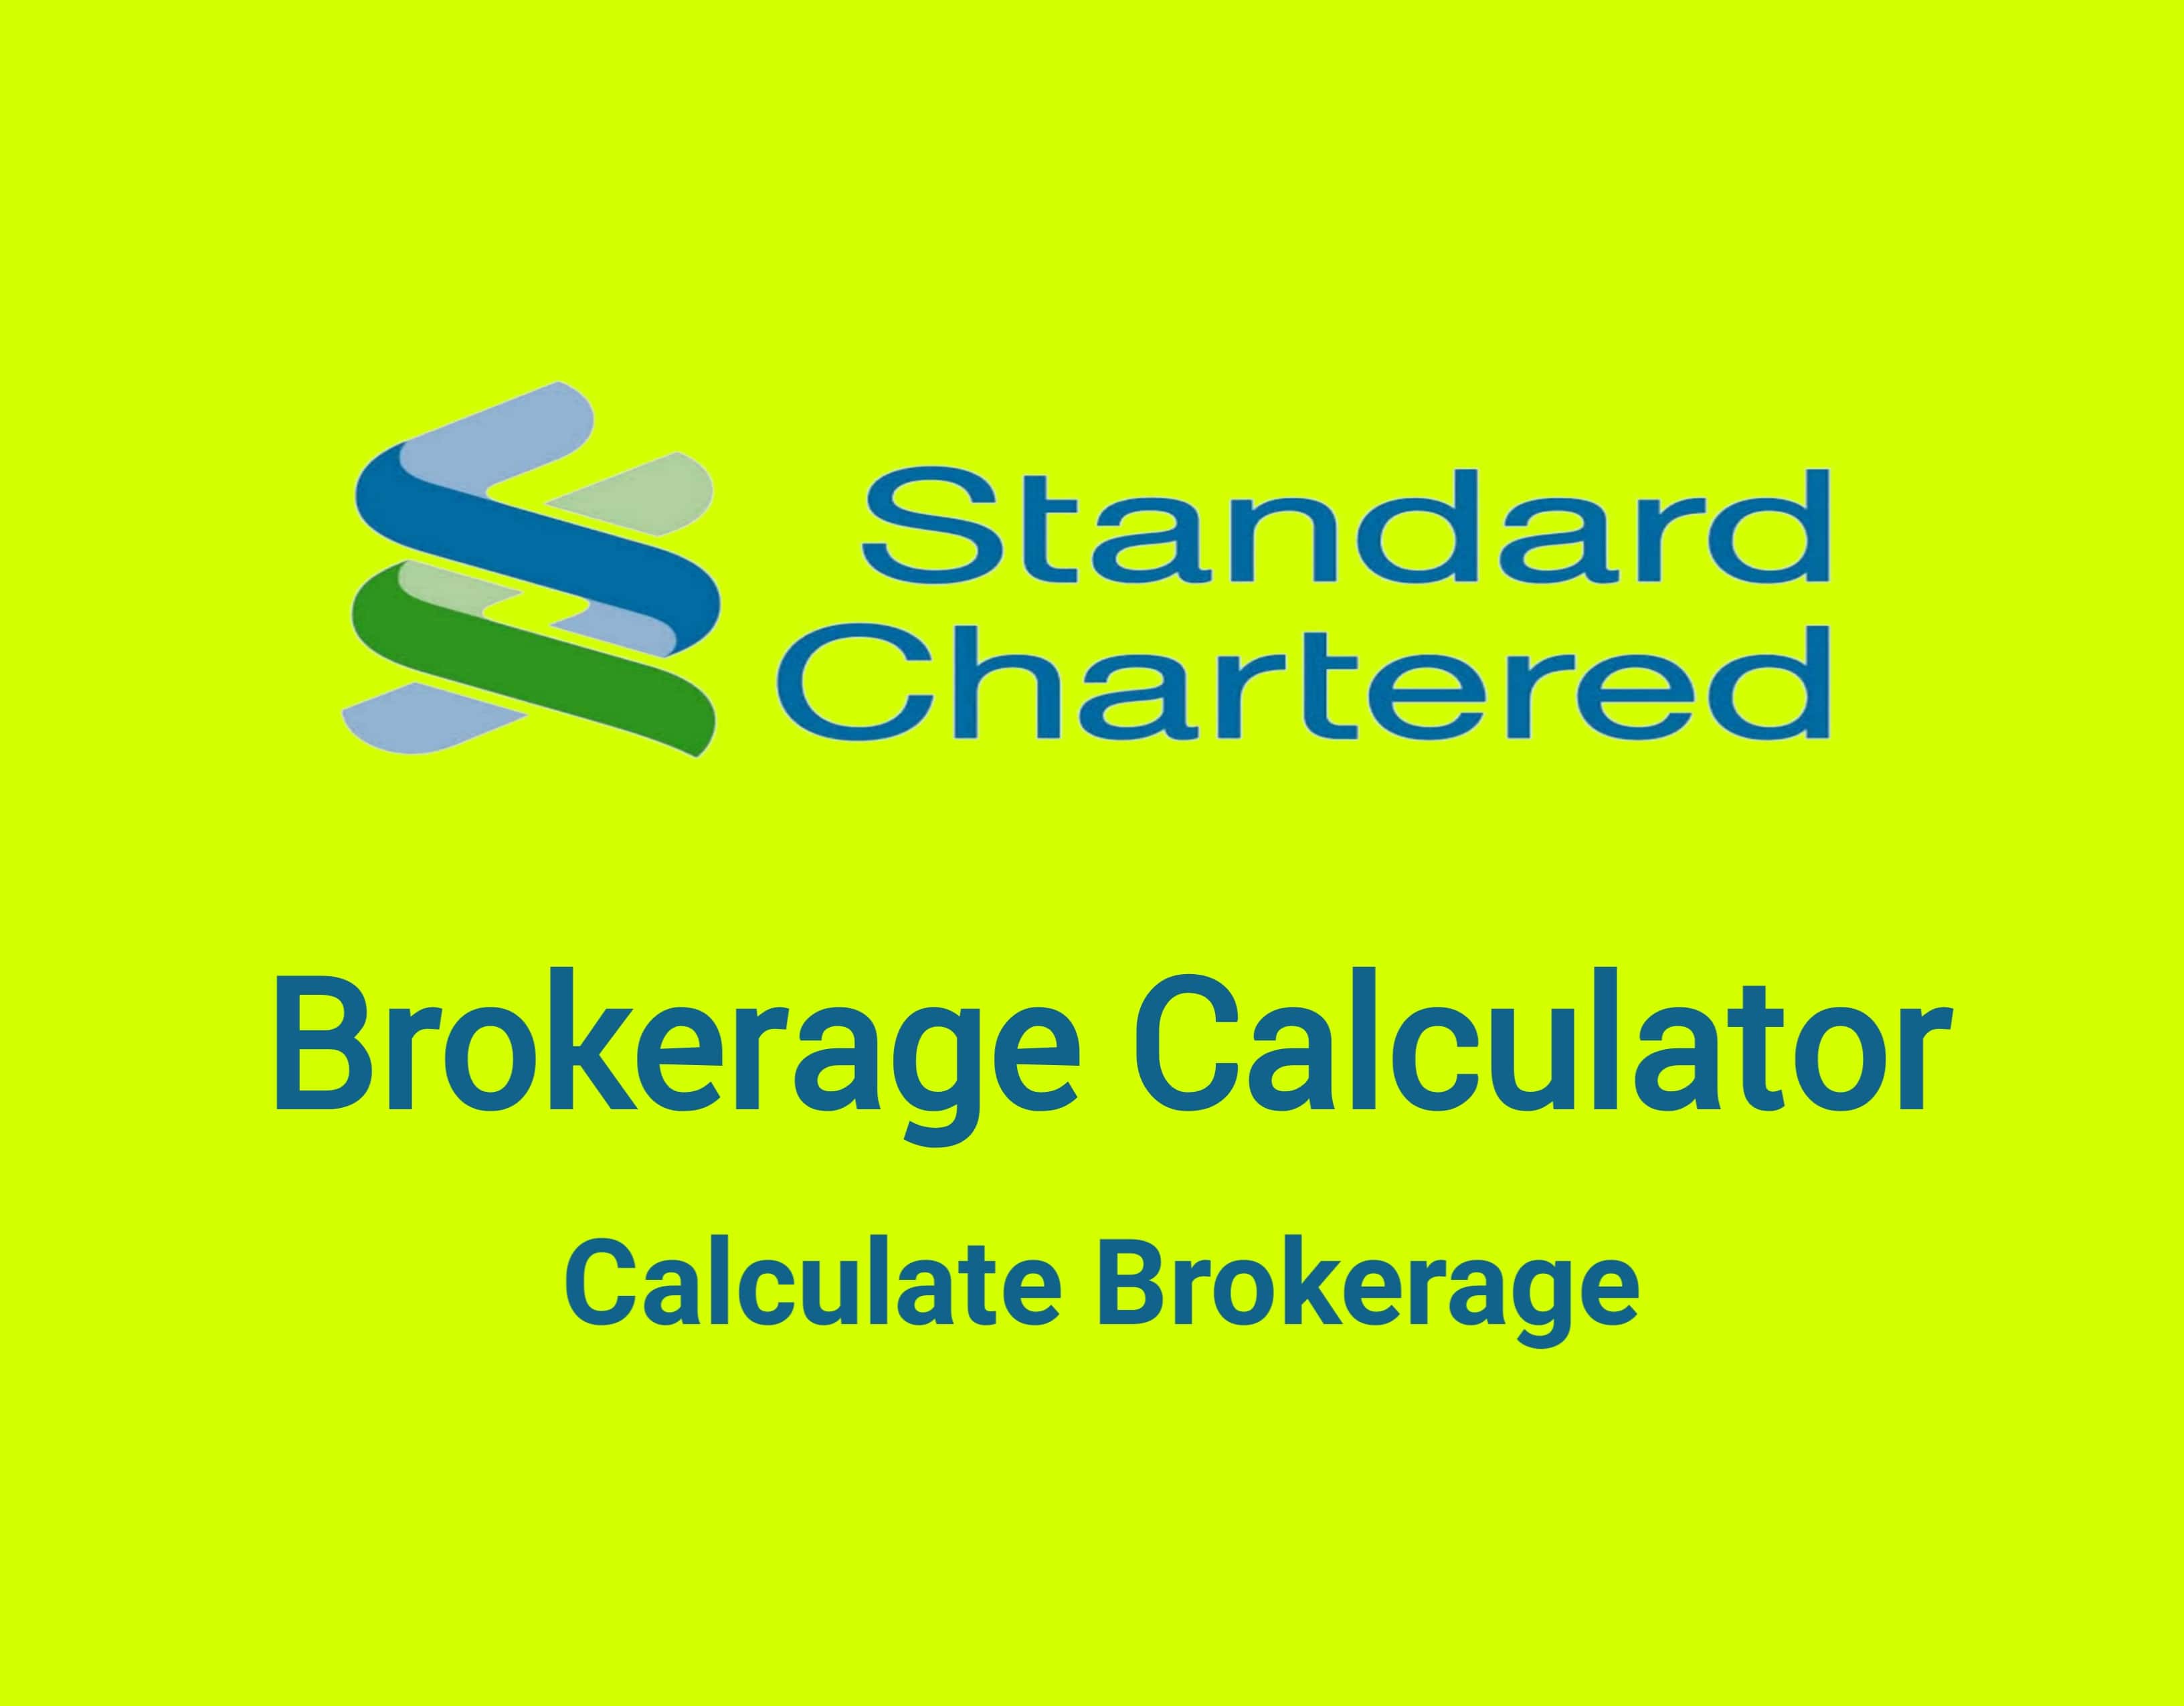 Standard Chartered Brokerage Calculator Online